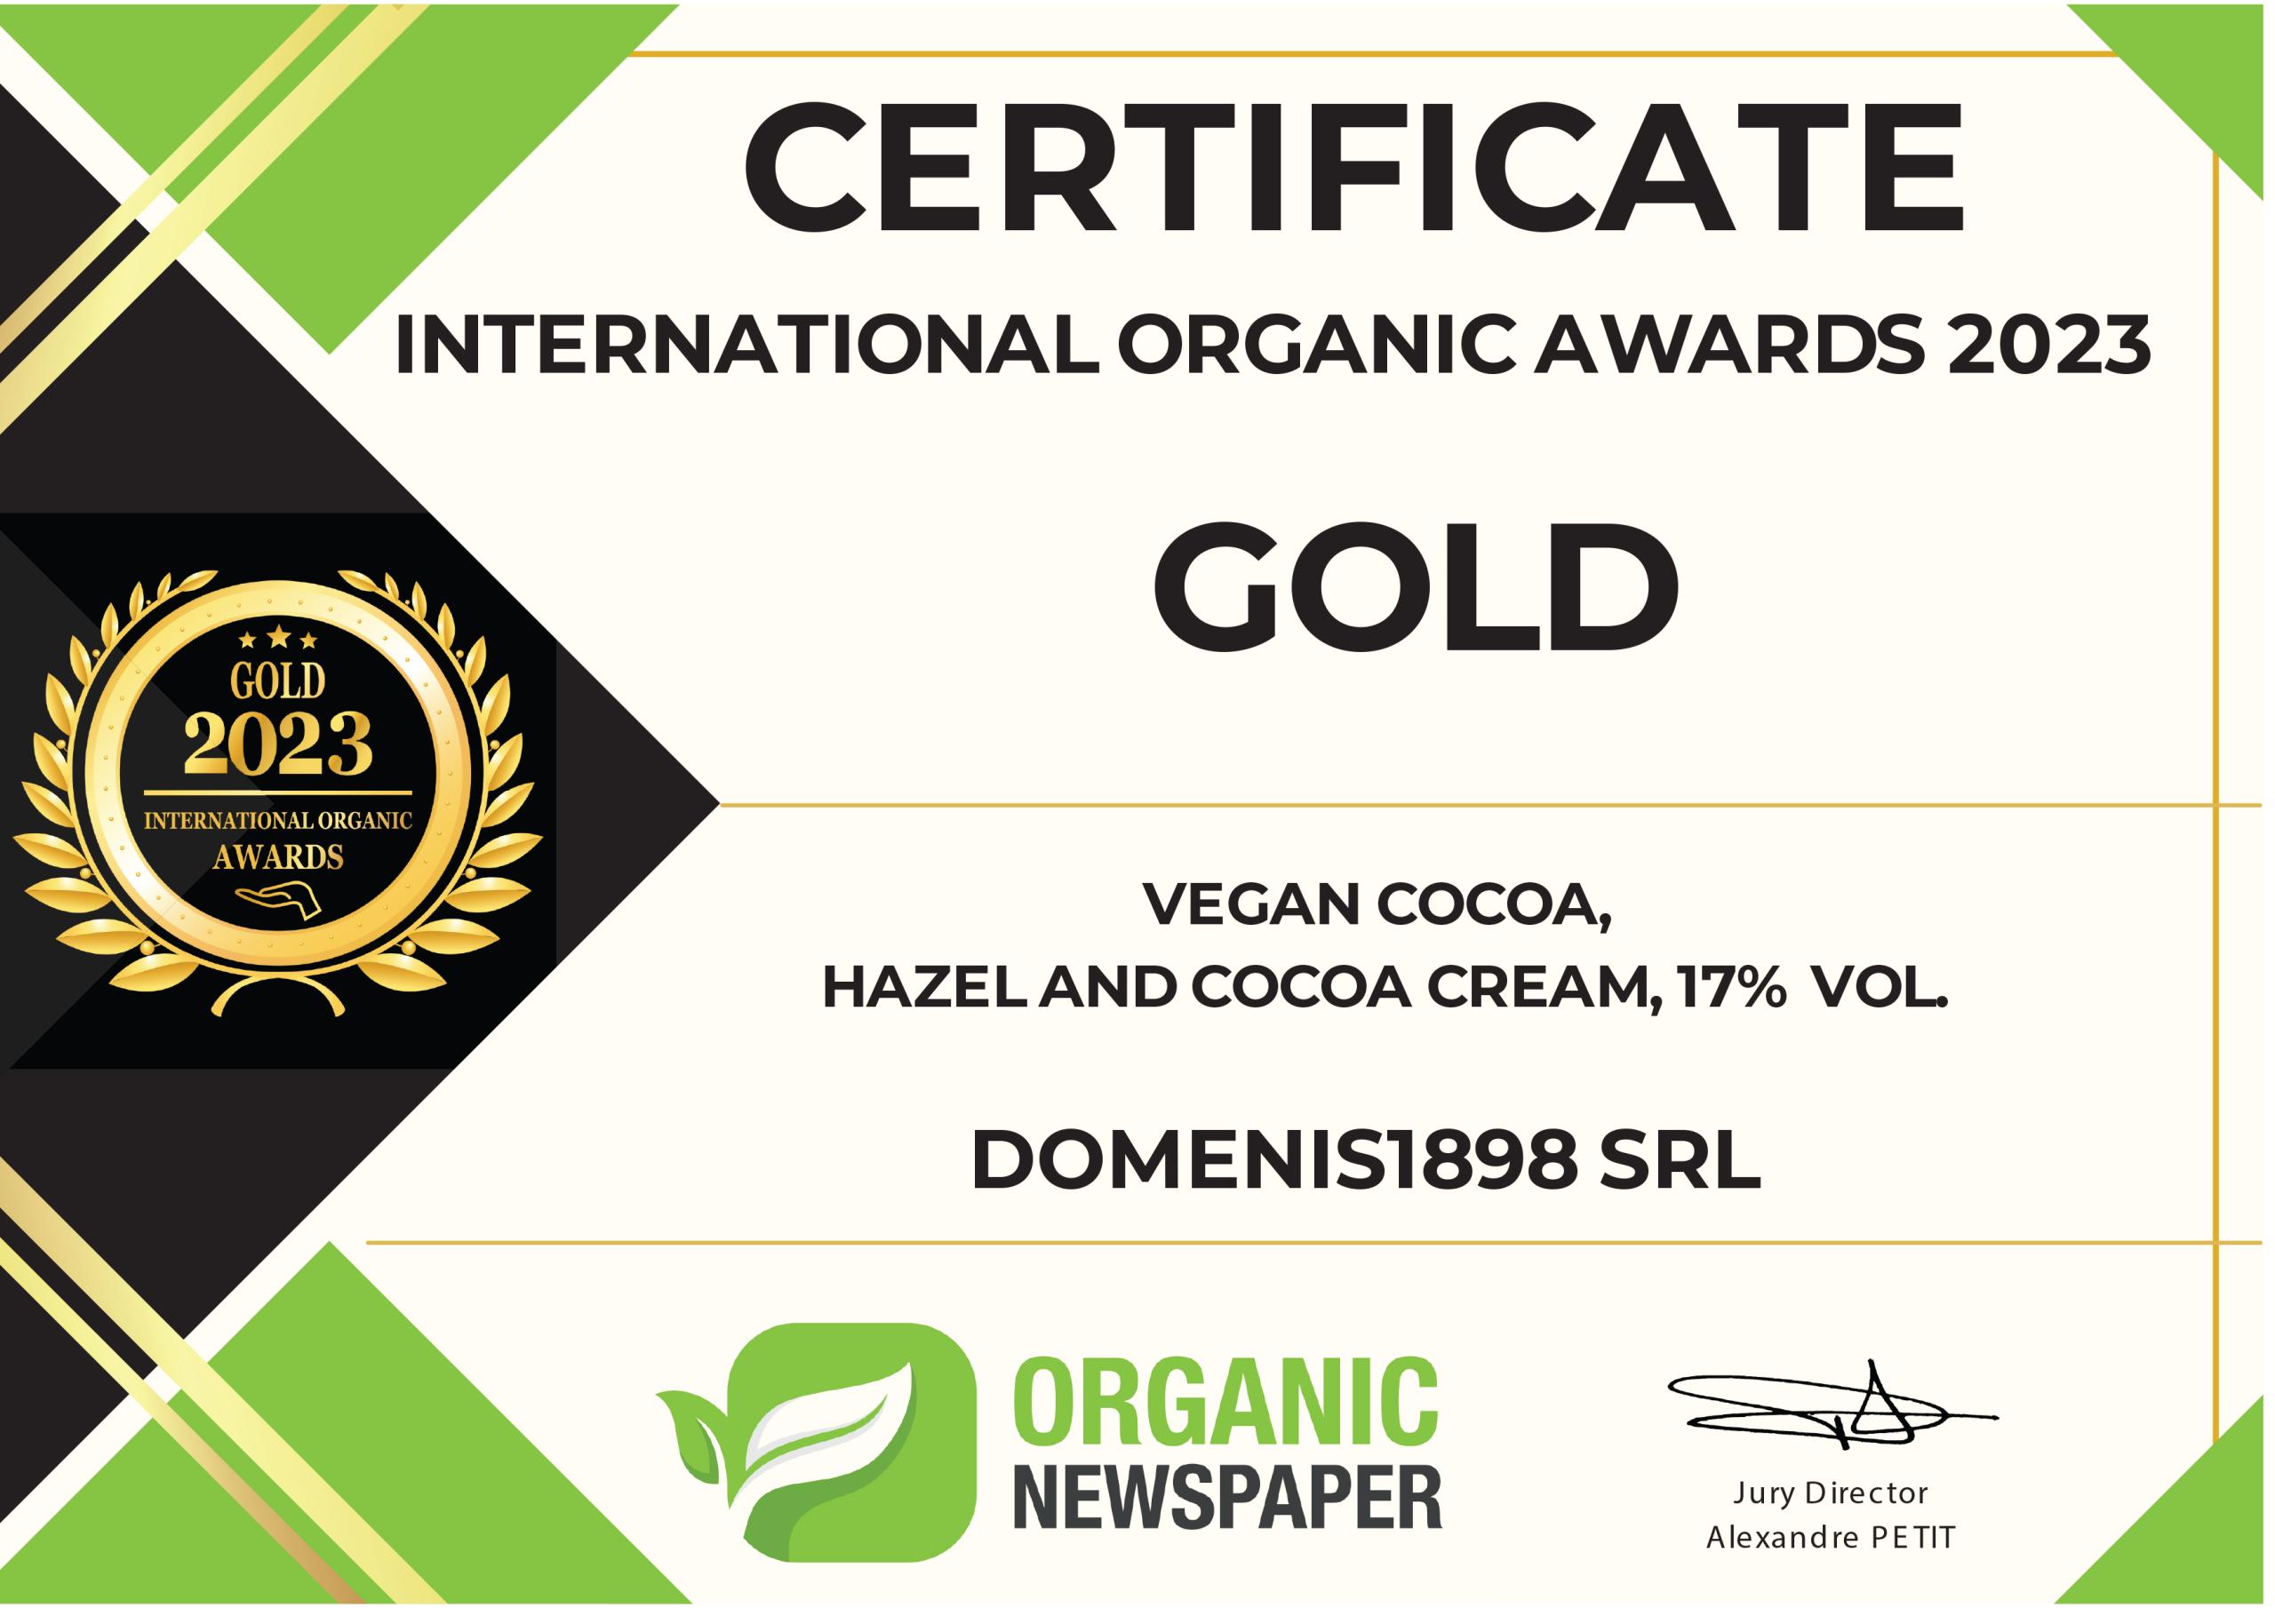 International Organic Awards 2023 – Gold Award – Vegan Cocoa